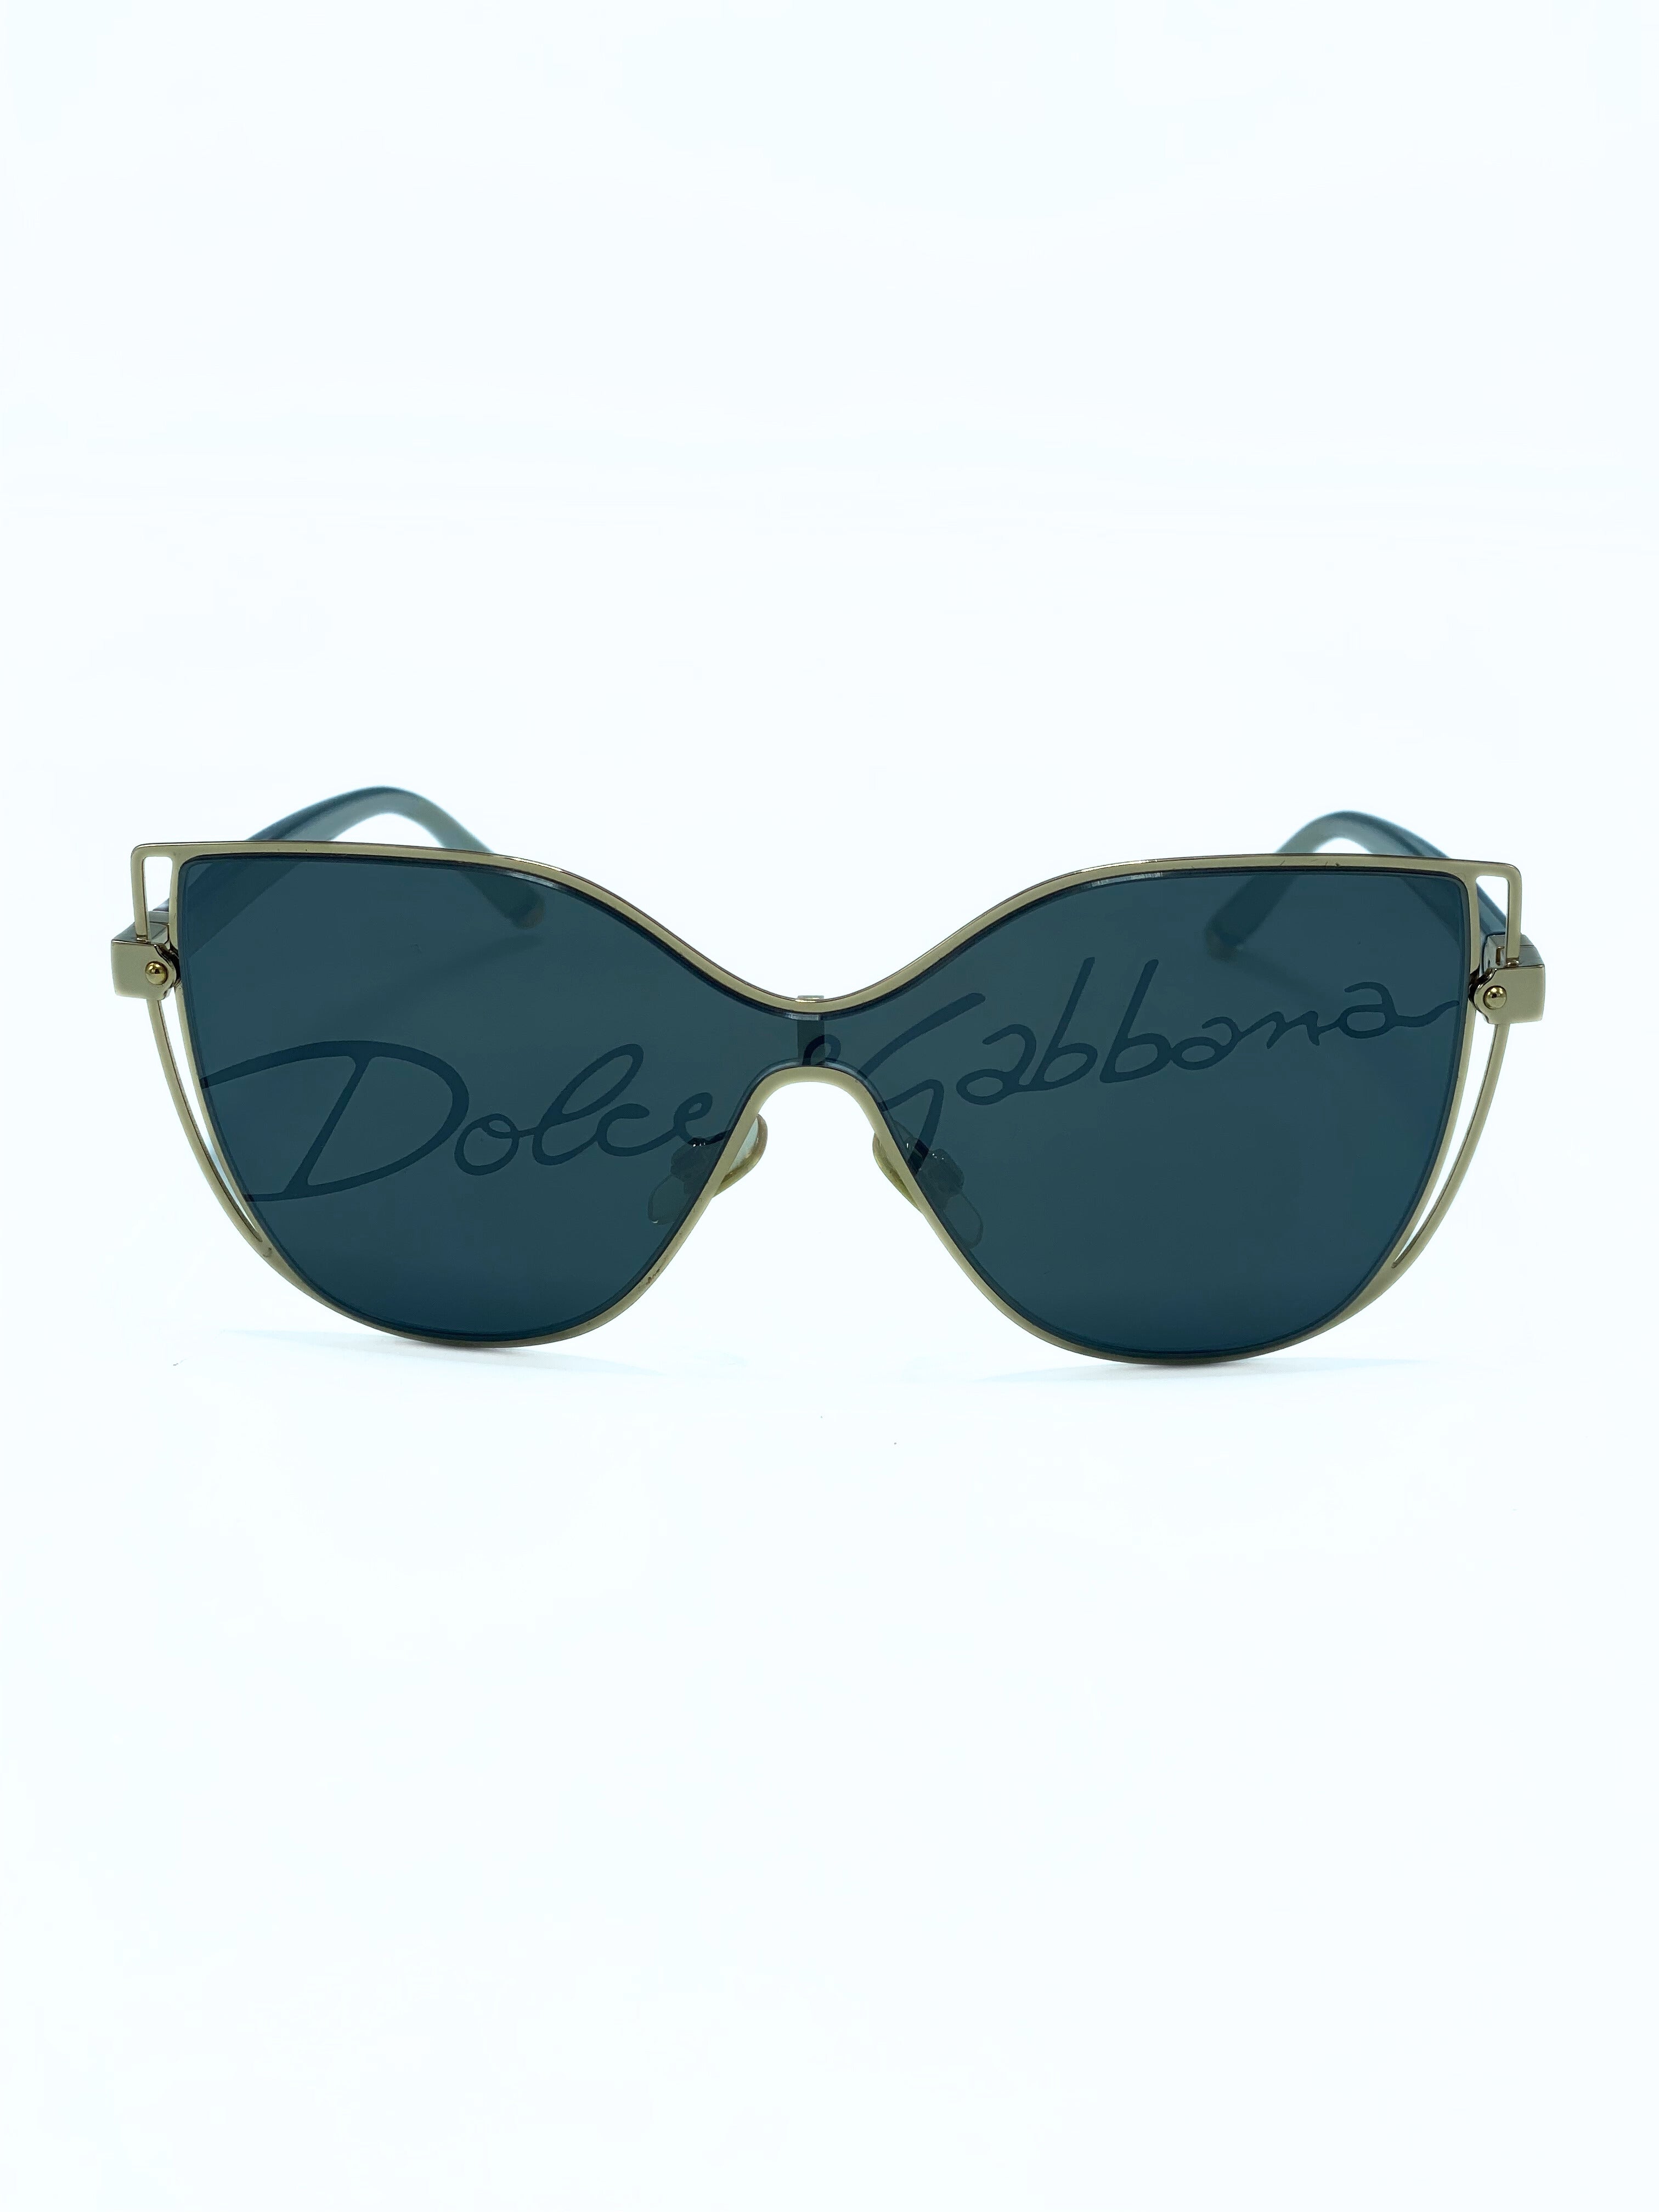 Lente de Sol Dolce Gabbana Mirrored DG2236